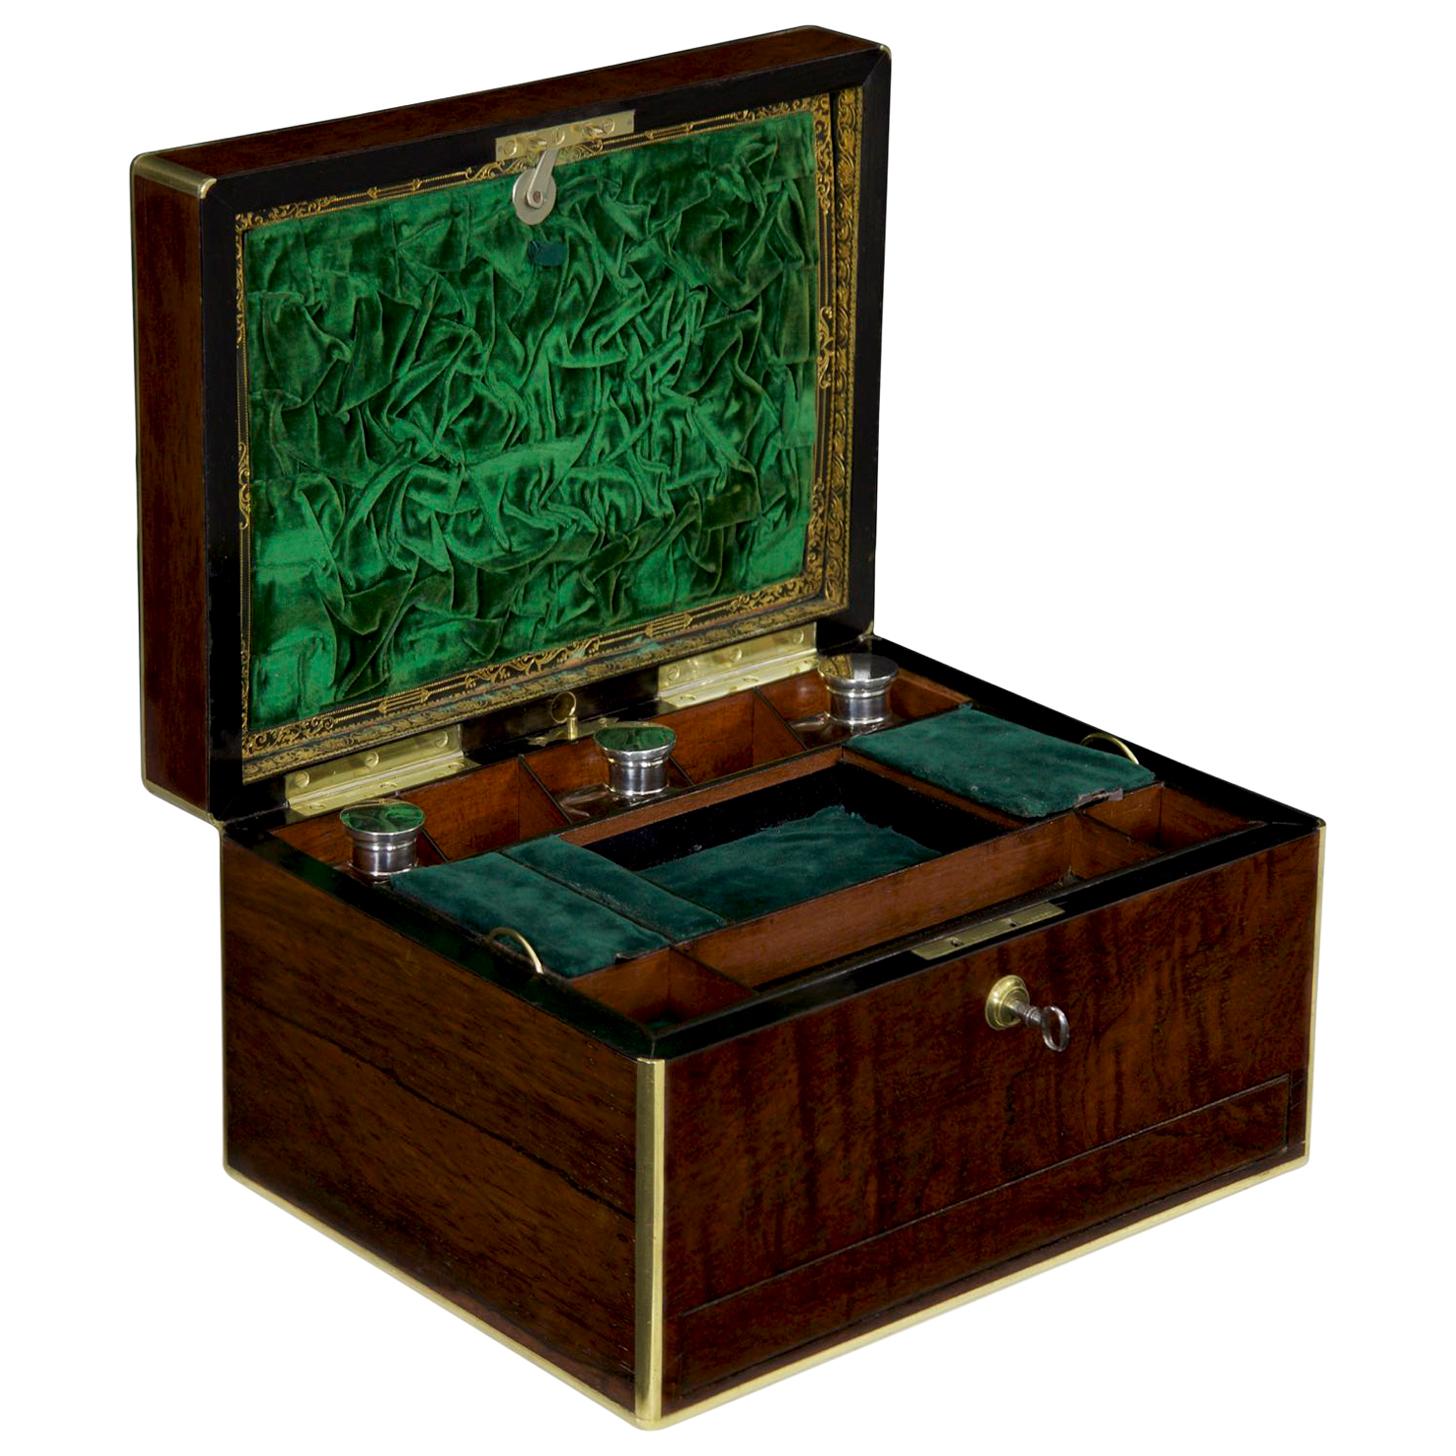 Bramah London Regency Brass and Rosewood Jewelry Box, circa 1850-1870